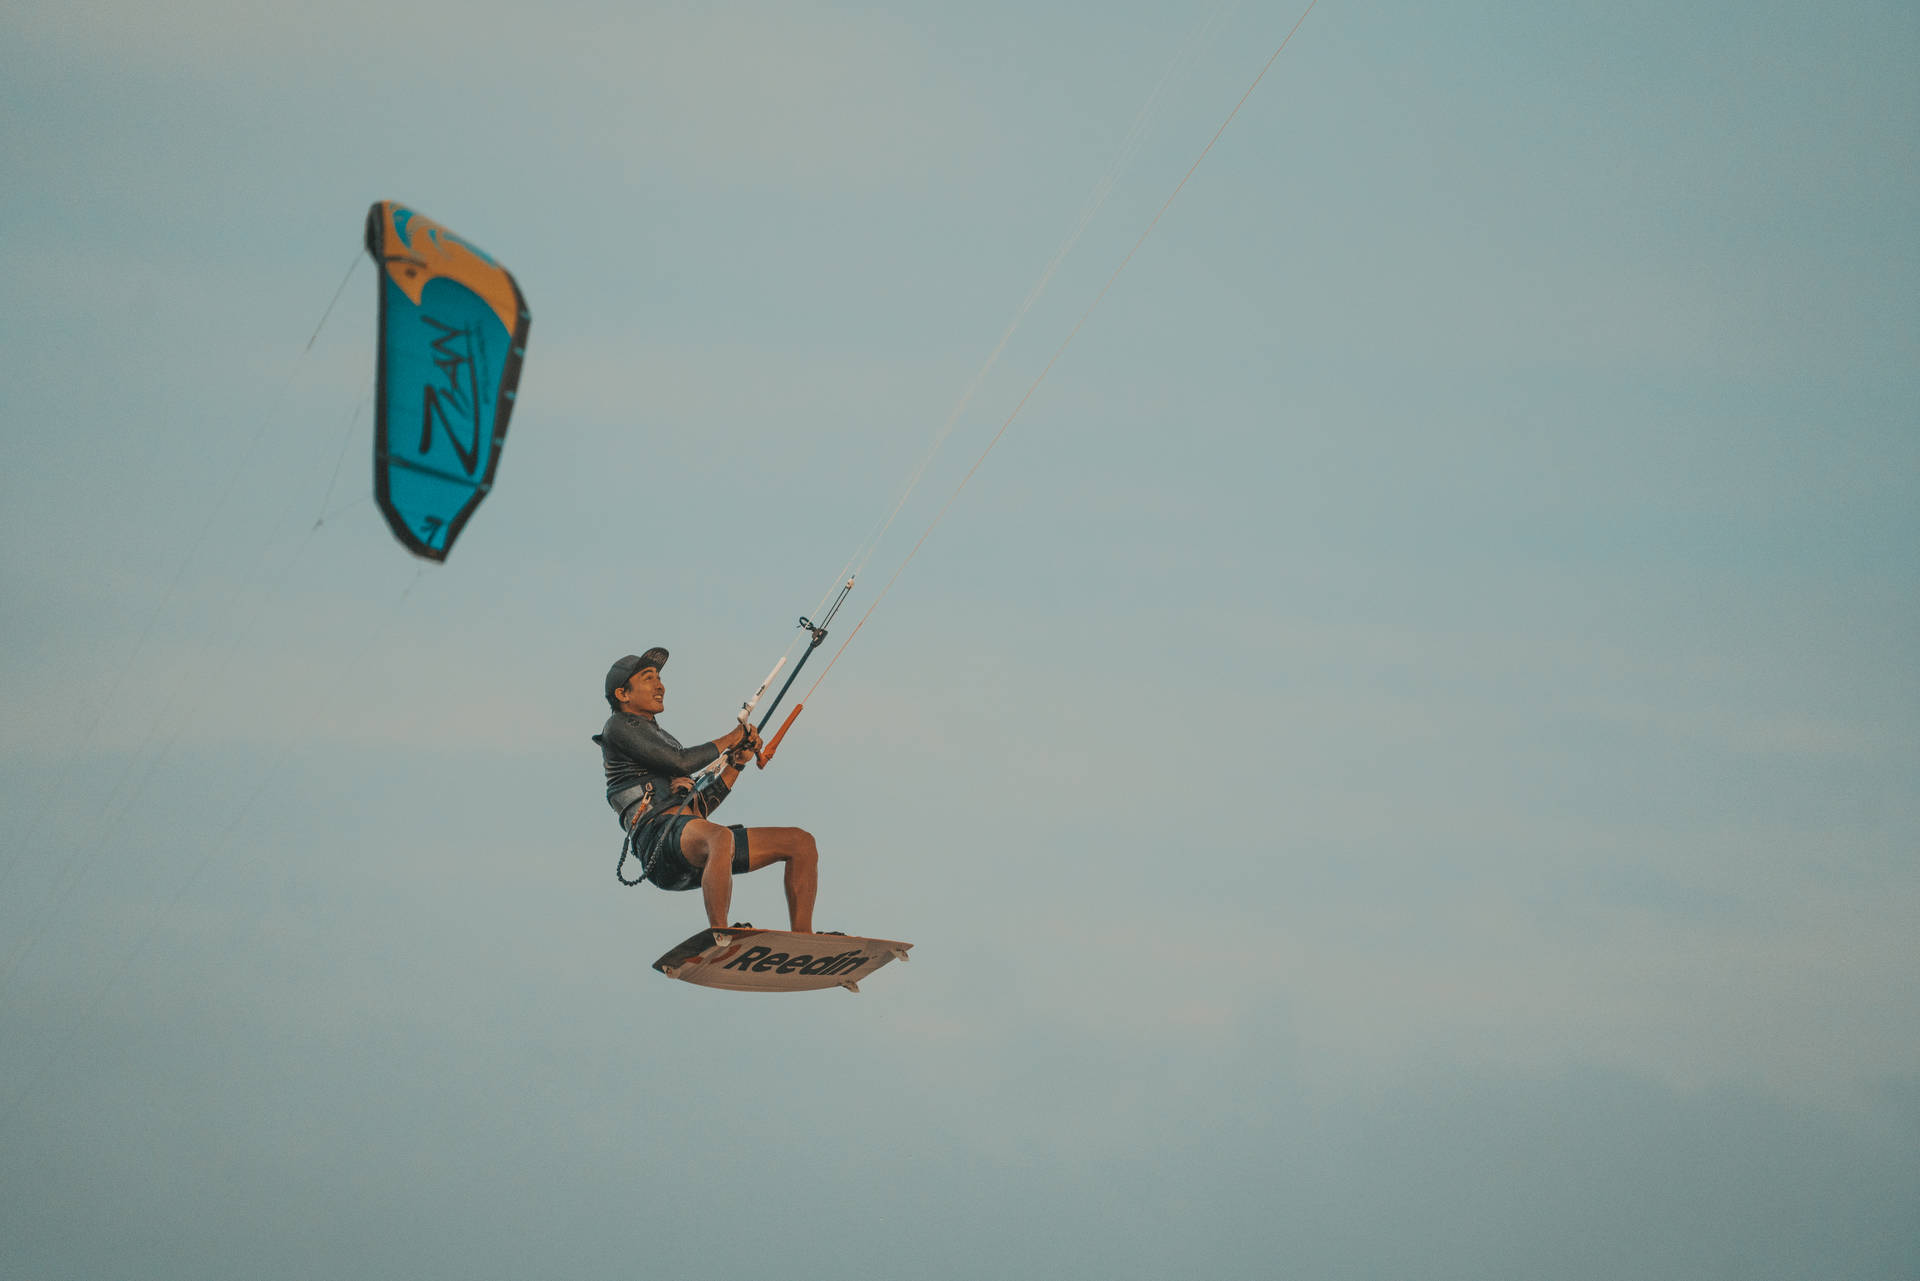 Windsurfing Extreme Stunt